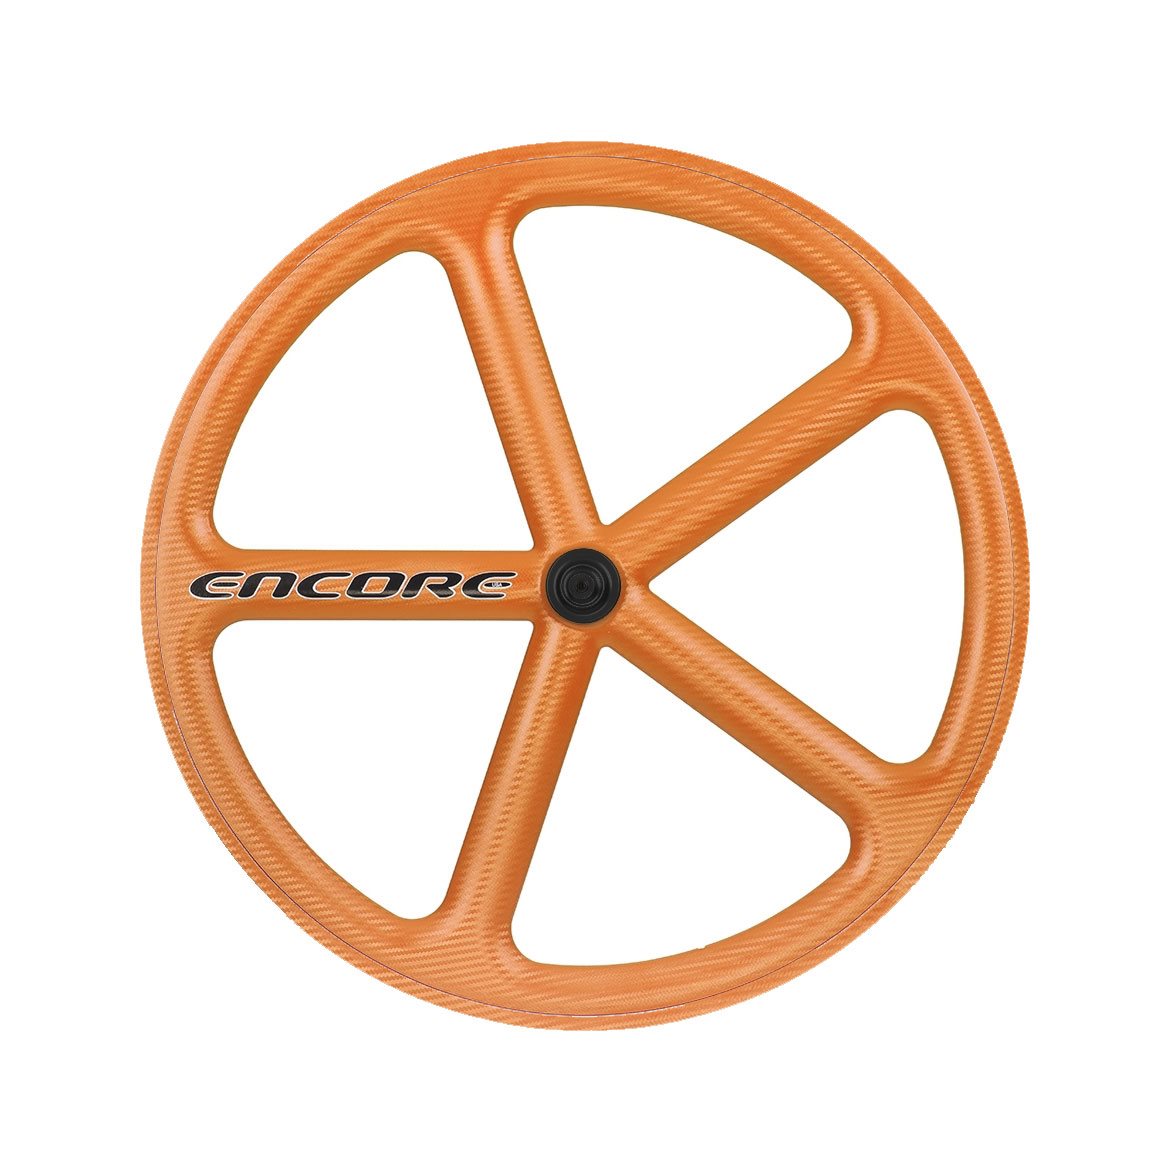 roue arrière 700c piste 5 rayons tissage carbone orange nmsw